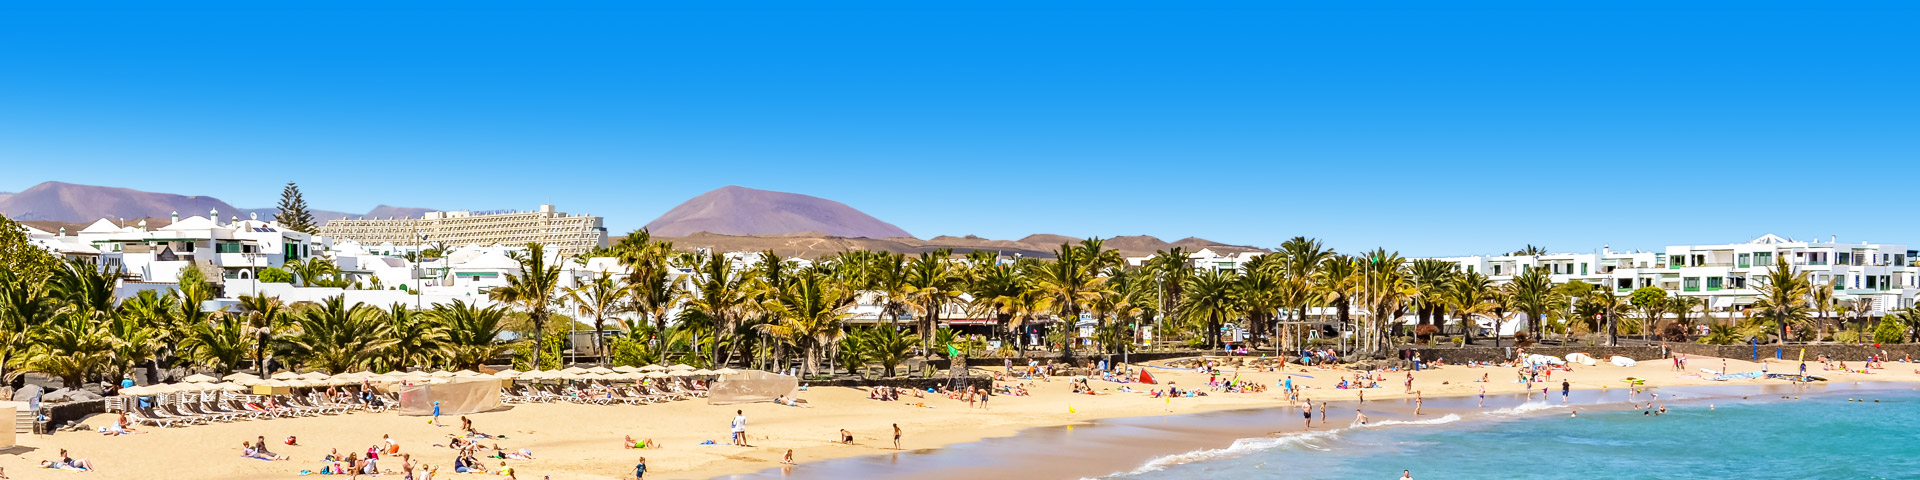 Strand met palmbomen en witte gebouwen Costa Teguise